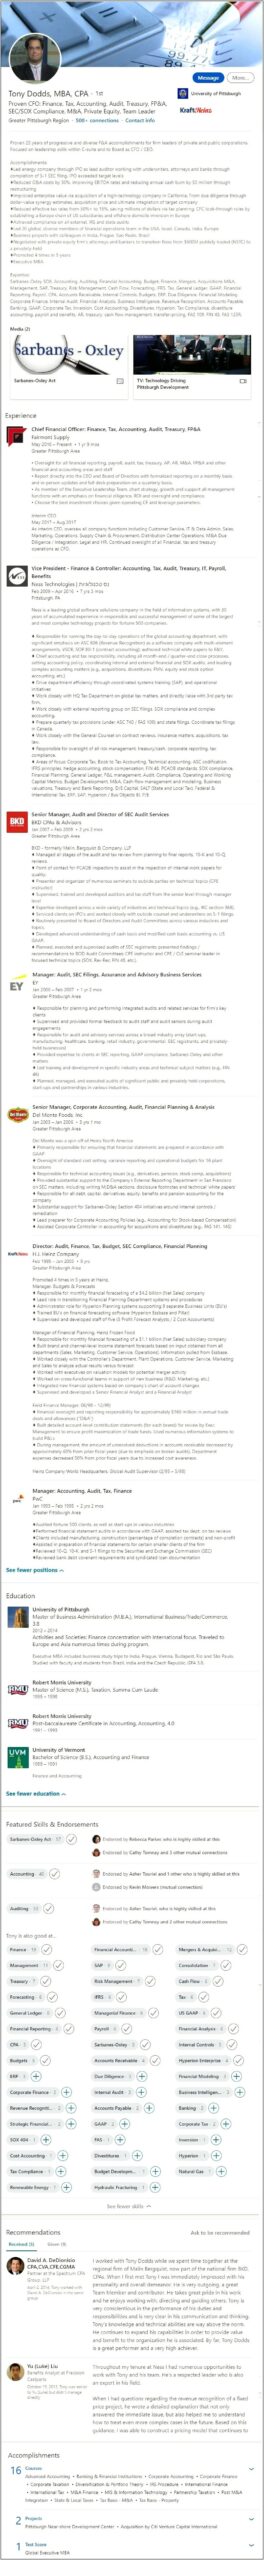 Vice President Fp&a Resume Sample